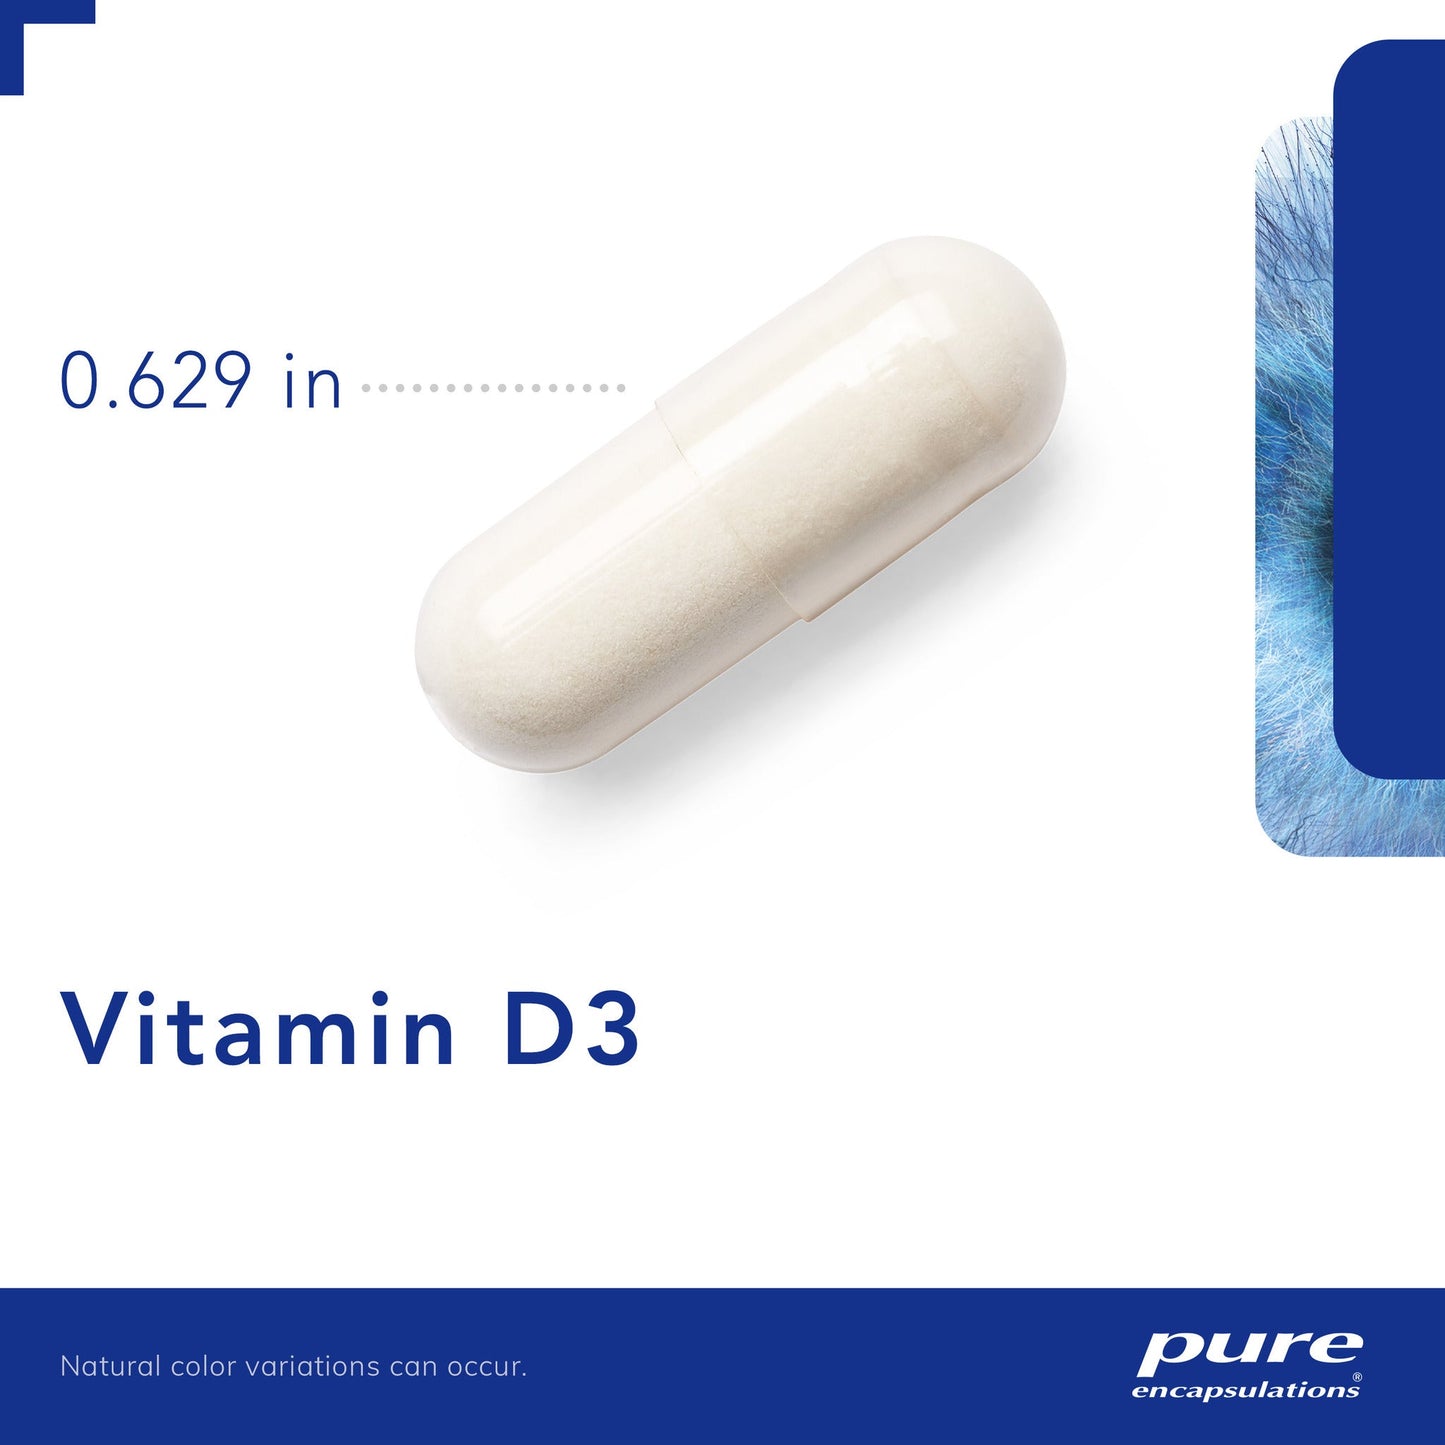 Vitamin D3 25 mcg (1,000 IU)